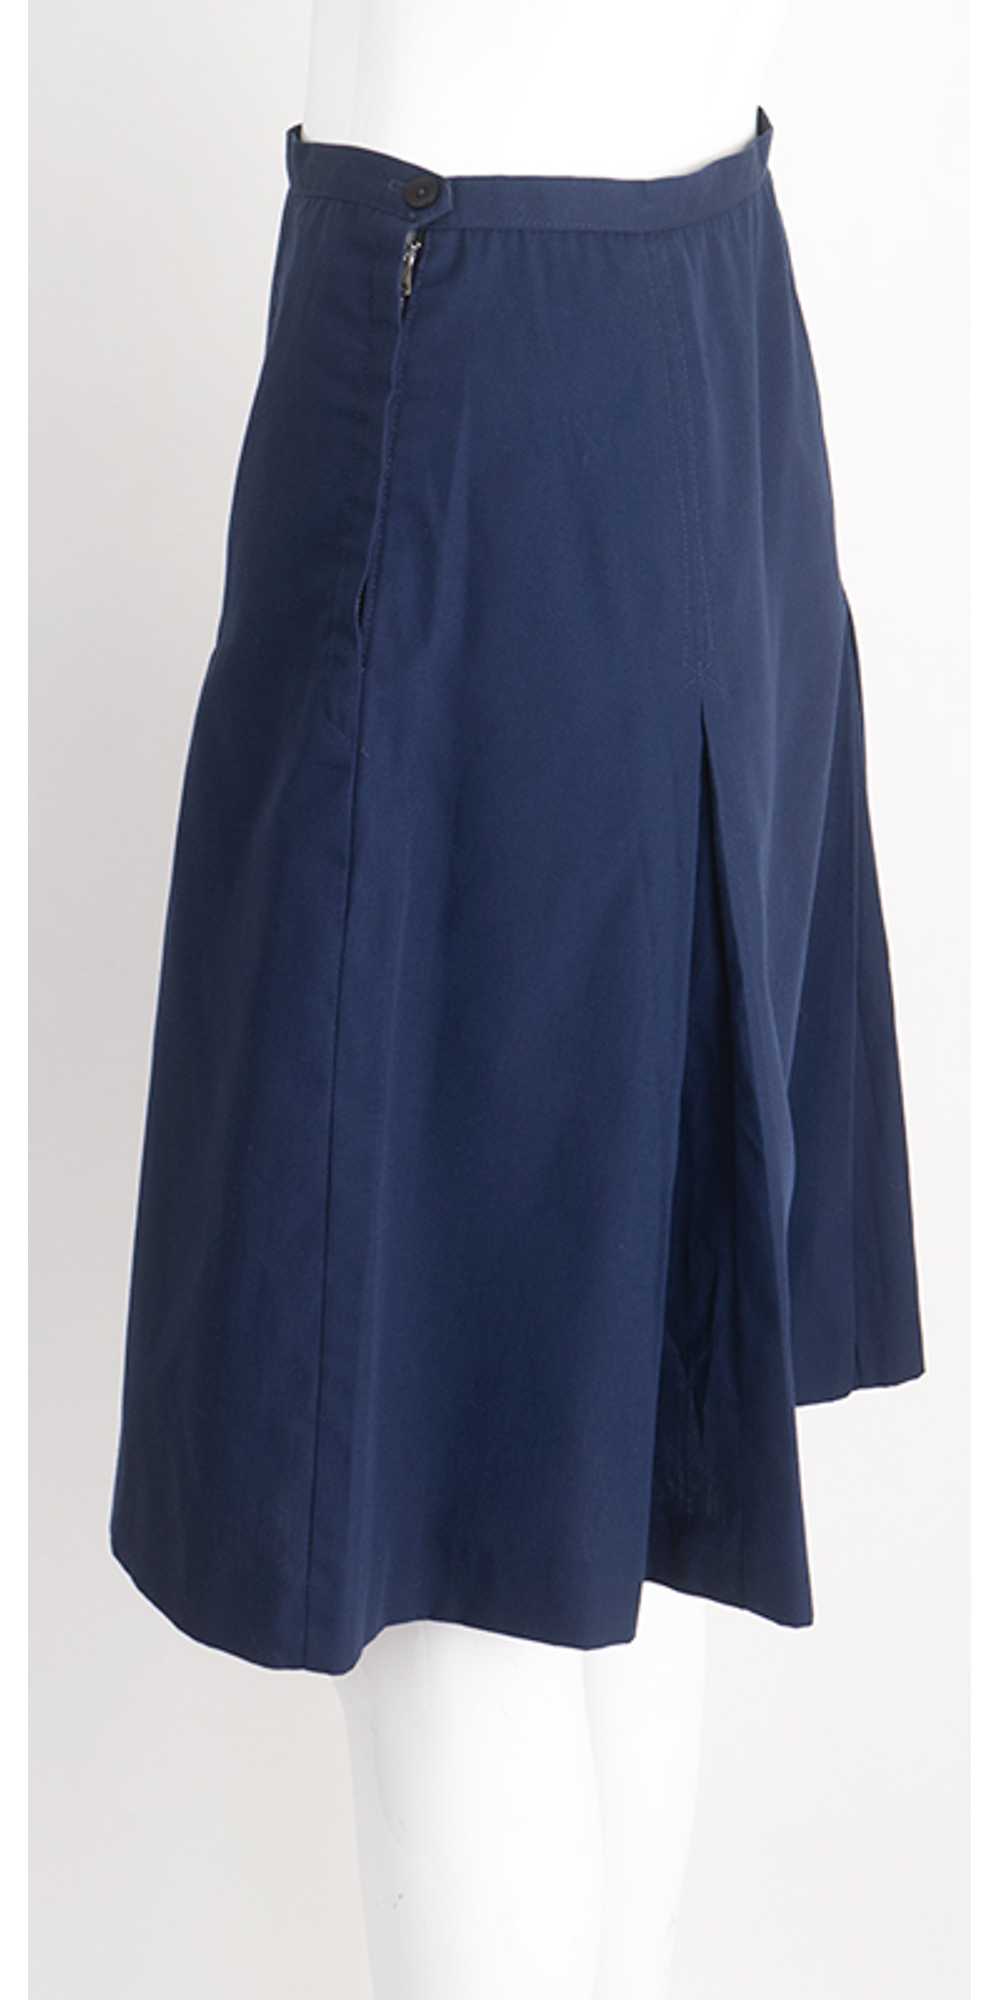 1940s Navy Pleated Skirt - image 3